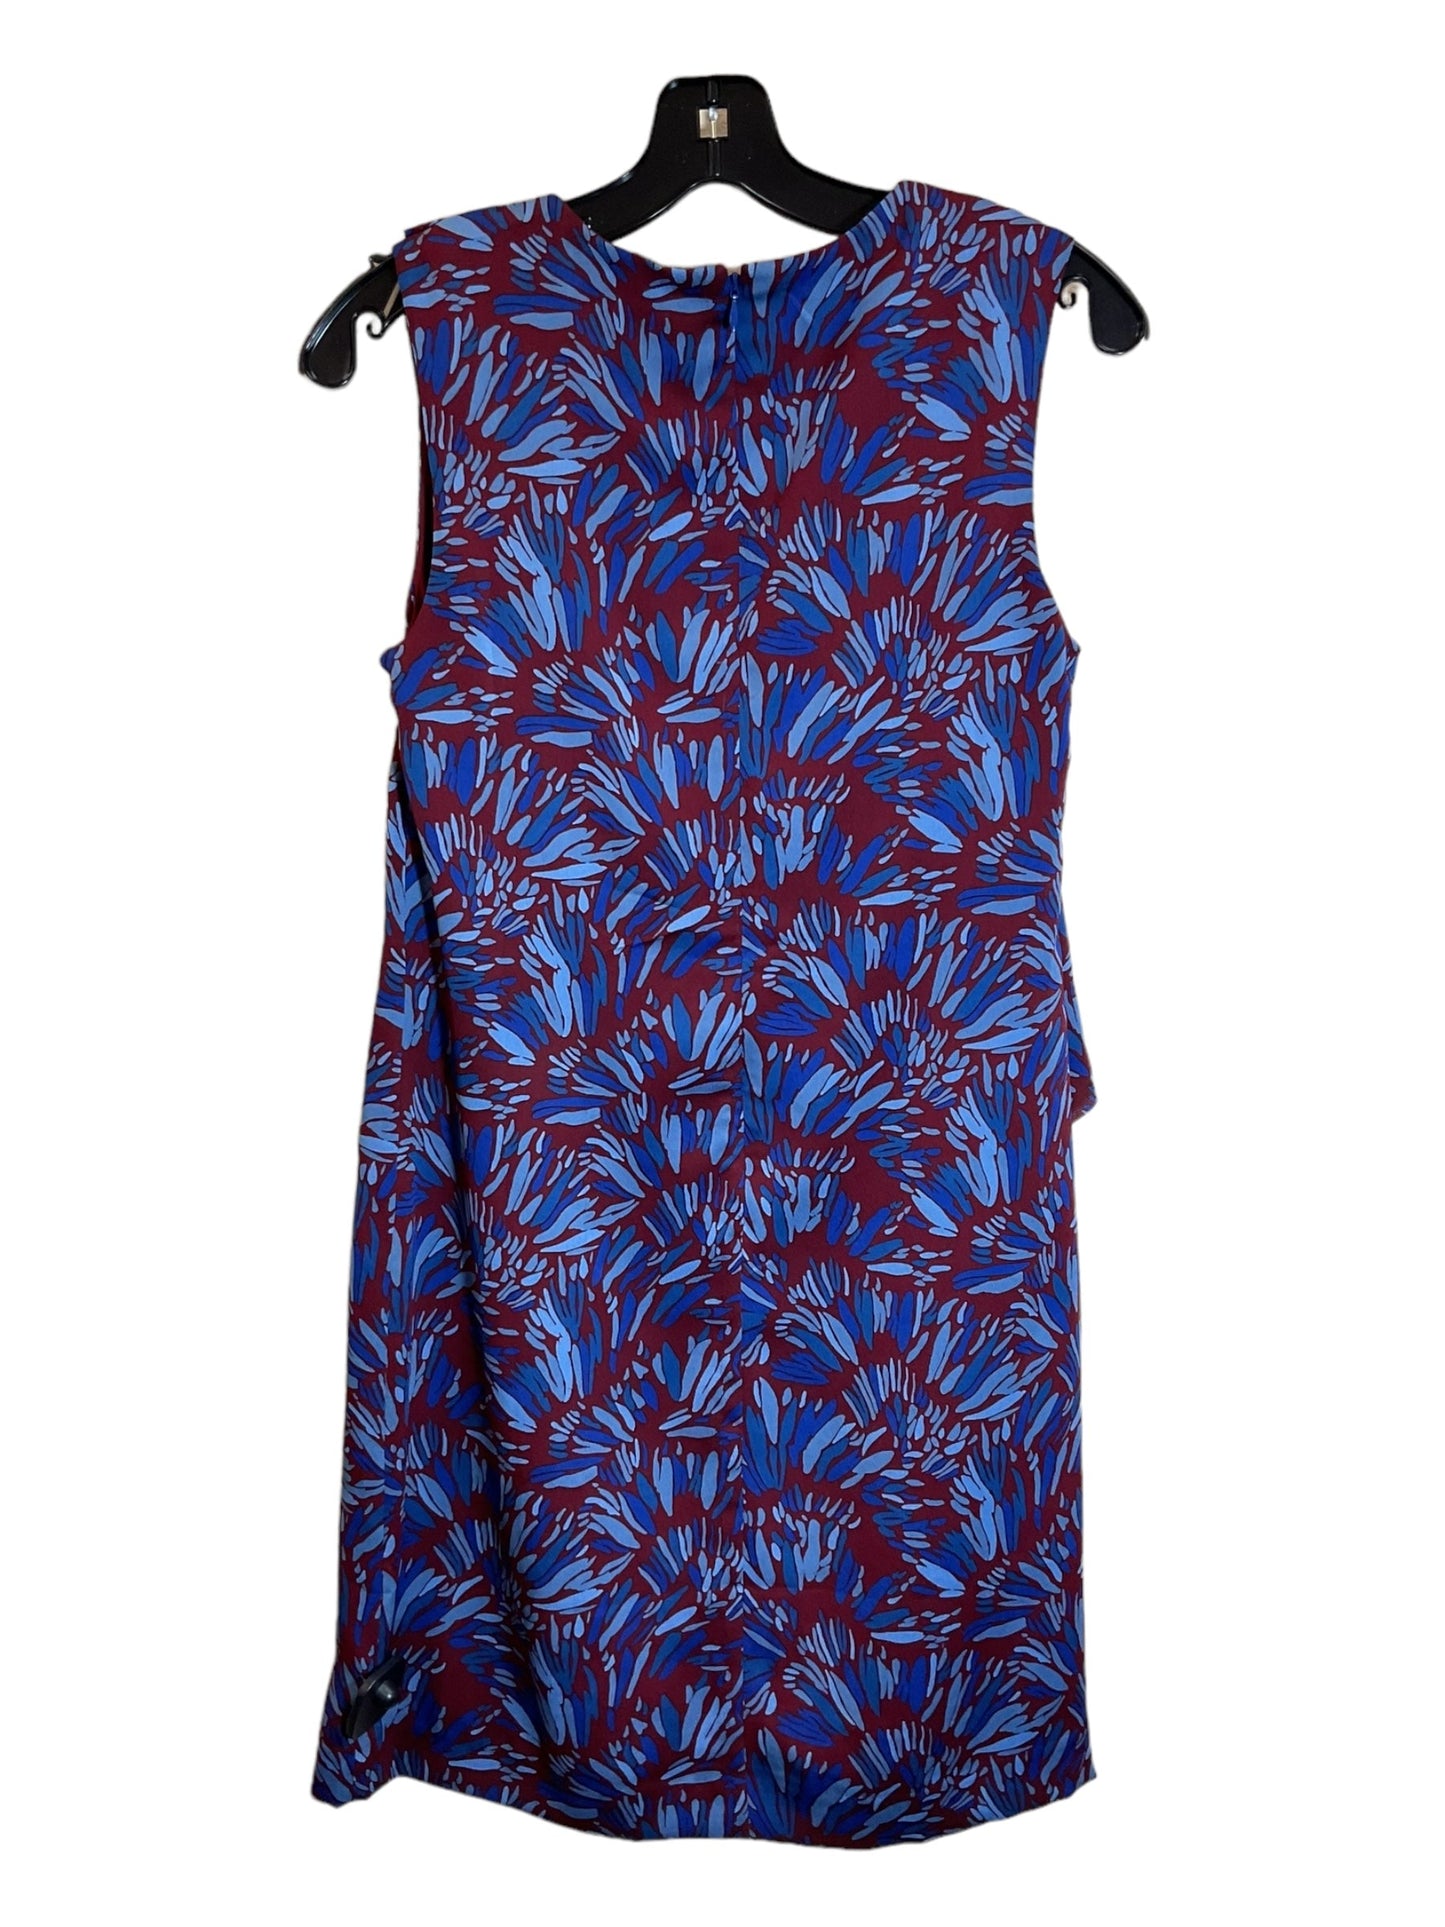 Dress Casual Short By Banana Republic  Size: Xs